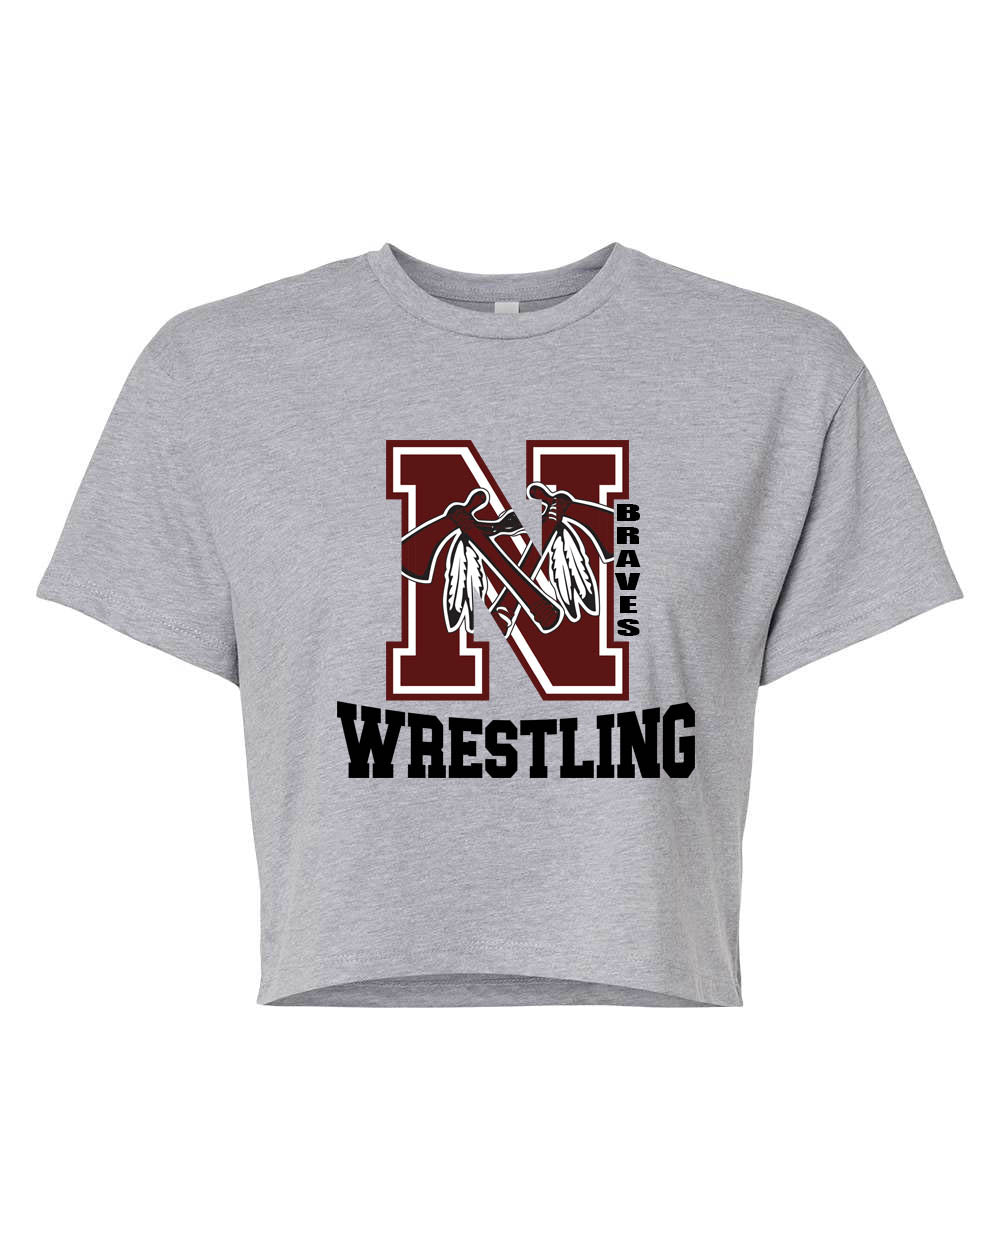 Newton wrestling Design 4 Crop Top